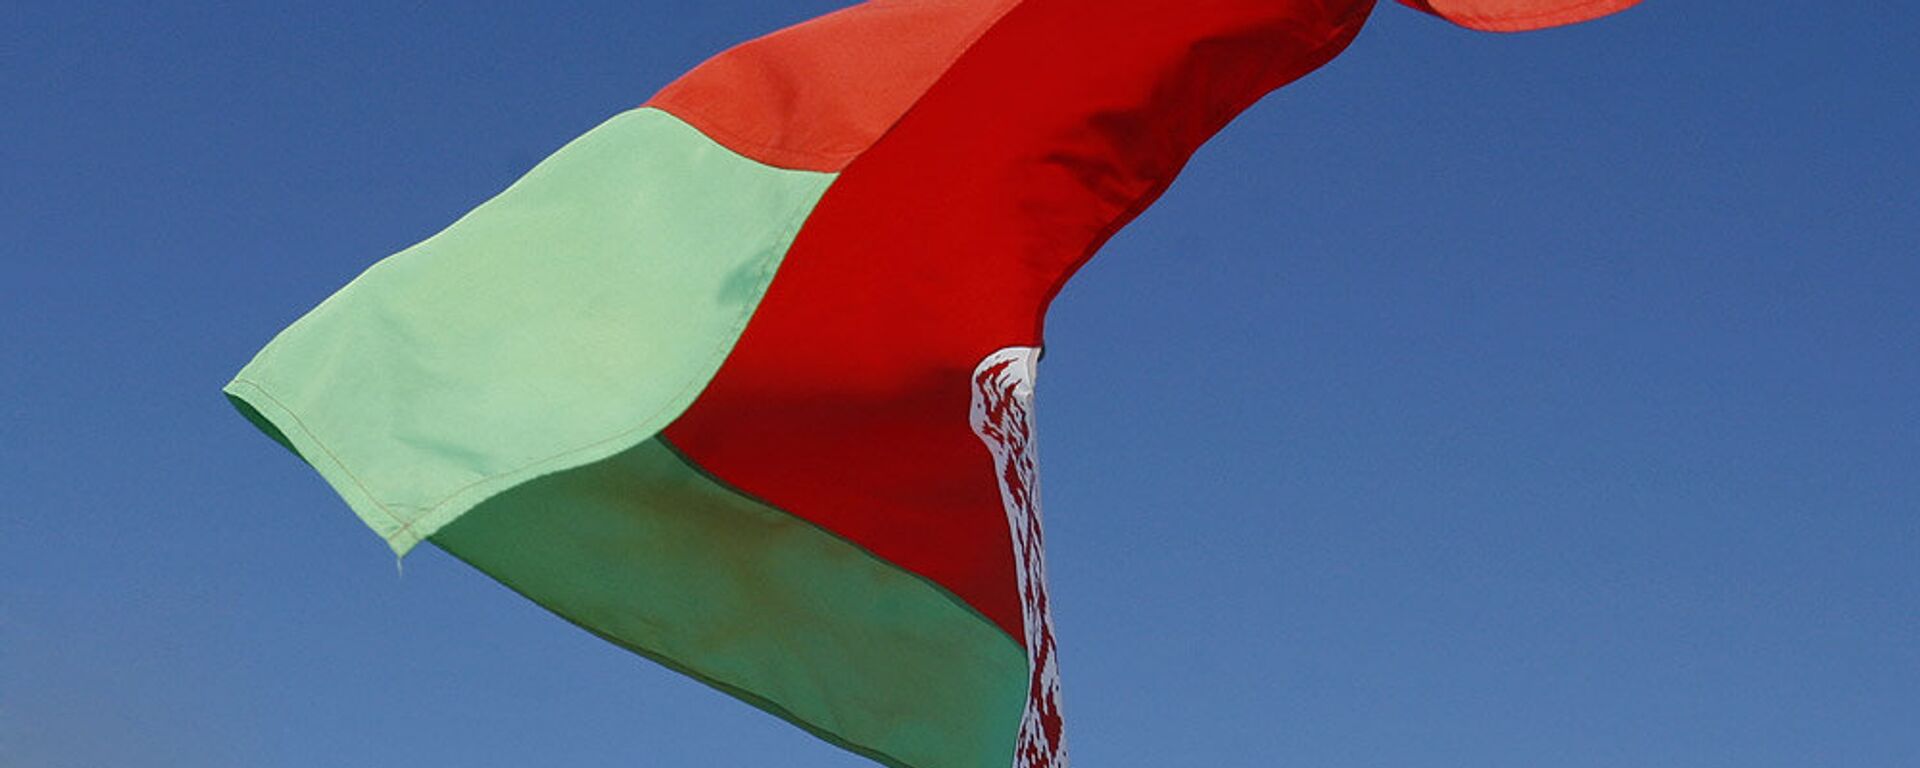 Bandera de Bielorrusia - Sputnik Mundo, 1920, 22.06.2021